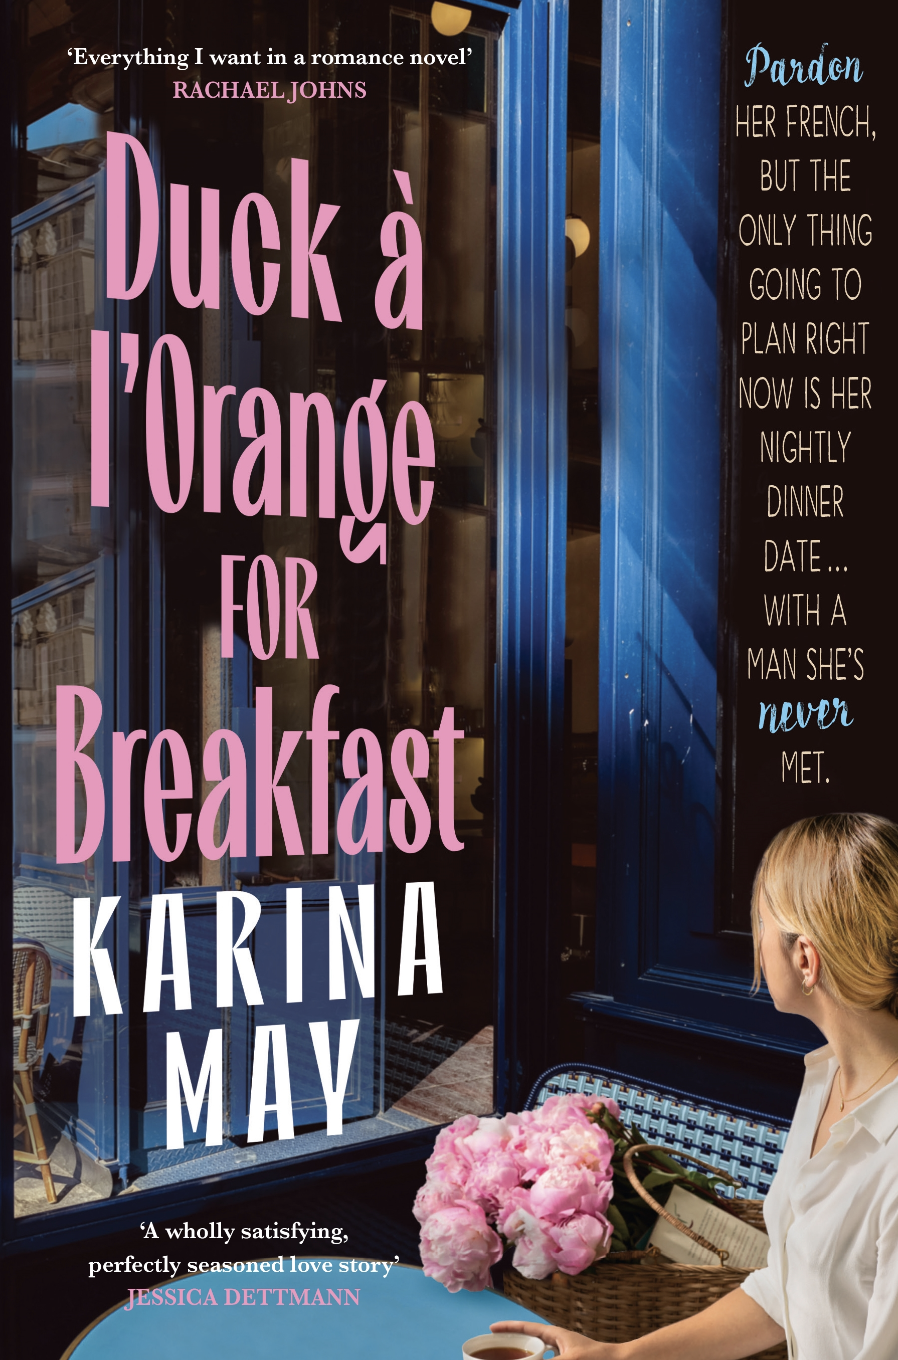 Duck à l'Orange for Breakfast - Karina May